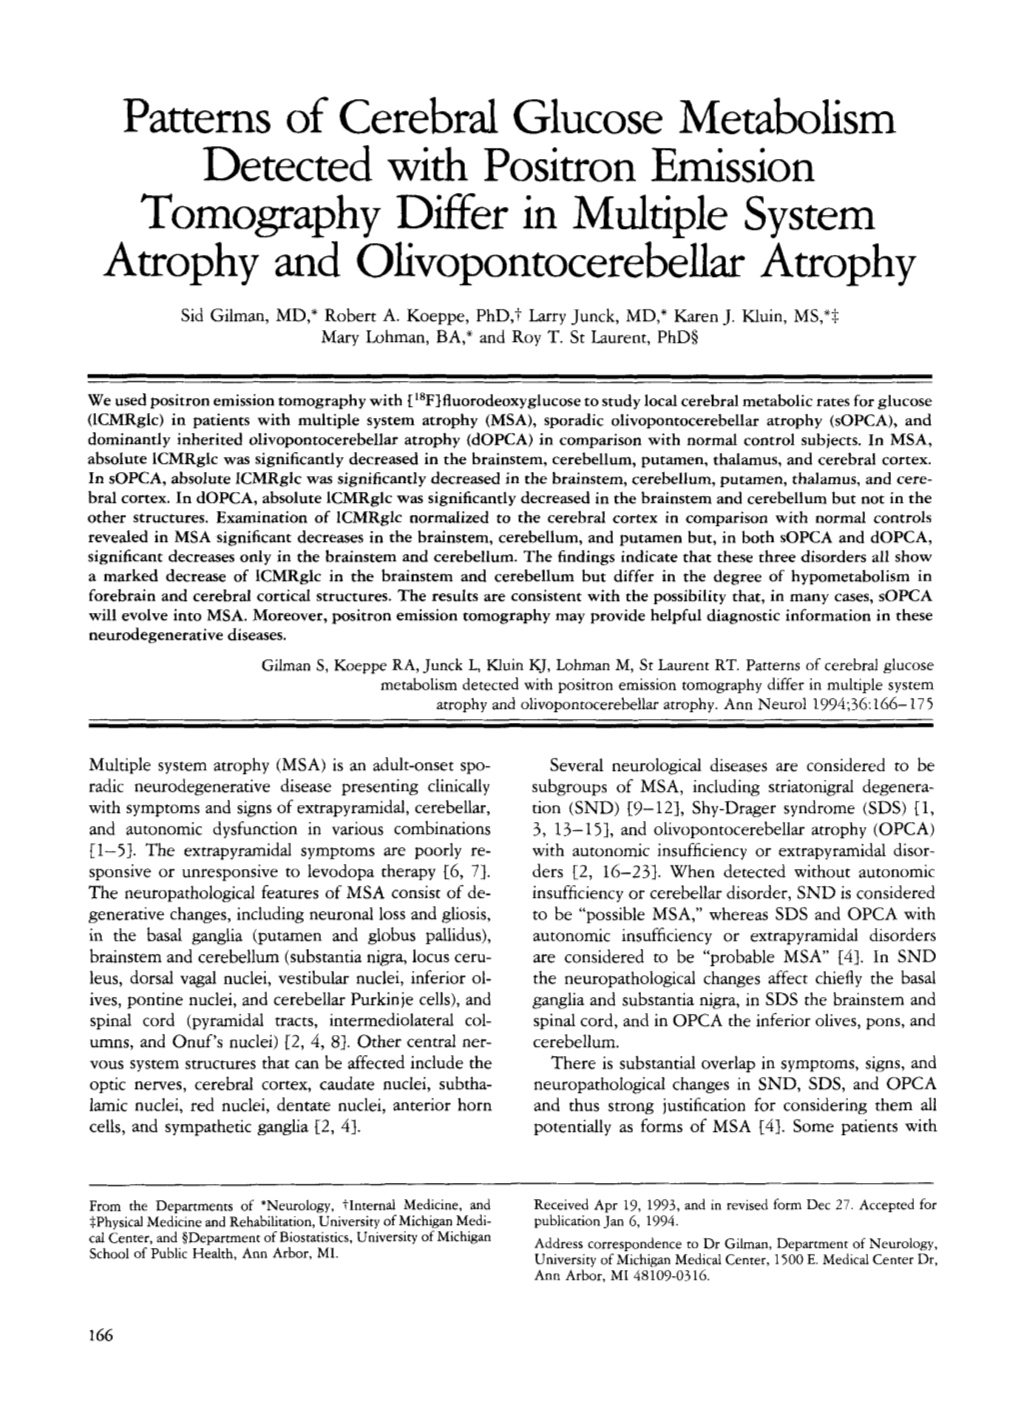 Patterns of Cerebral Glucose Metabolism Detected with Positron Emission Tomography Dfier in Multiple System Atrophy and Olivopontocerebellar Atrophy